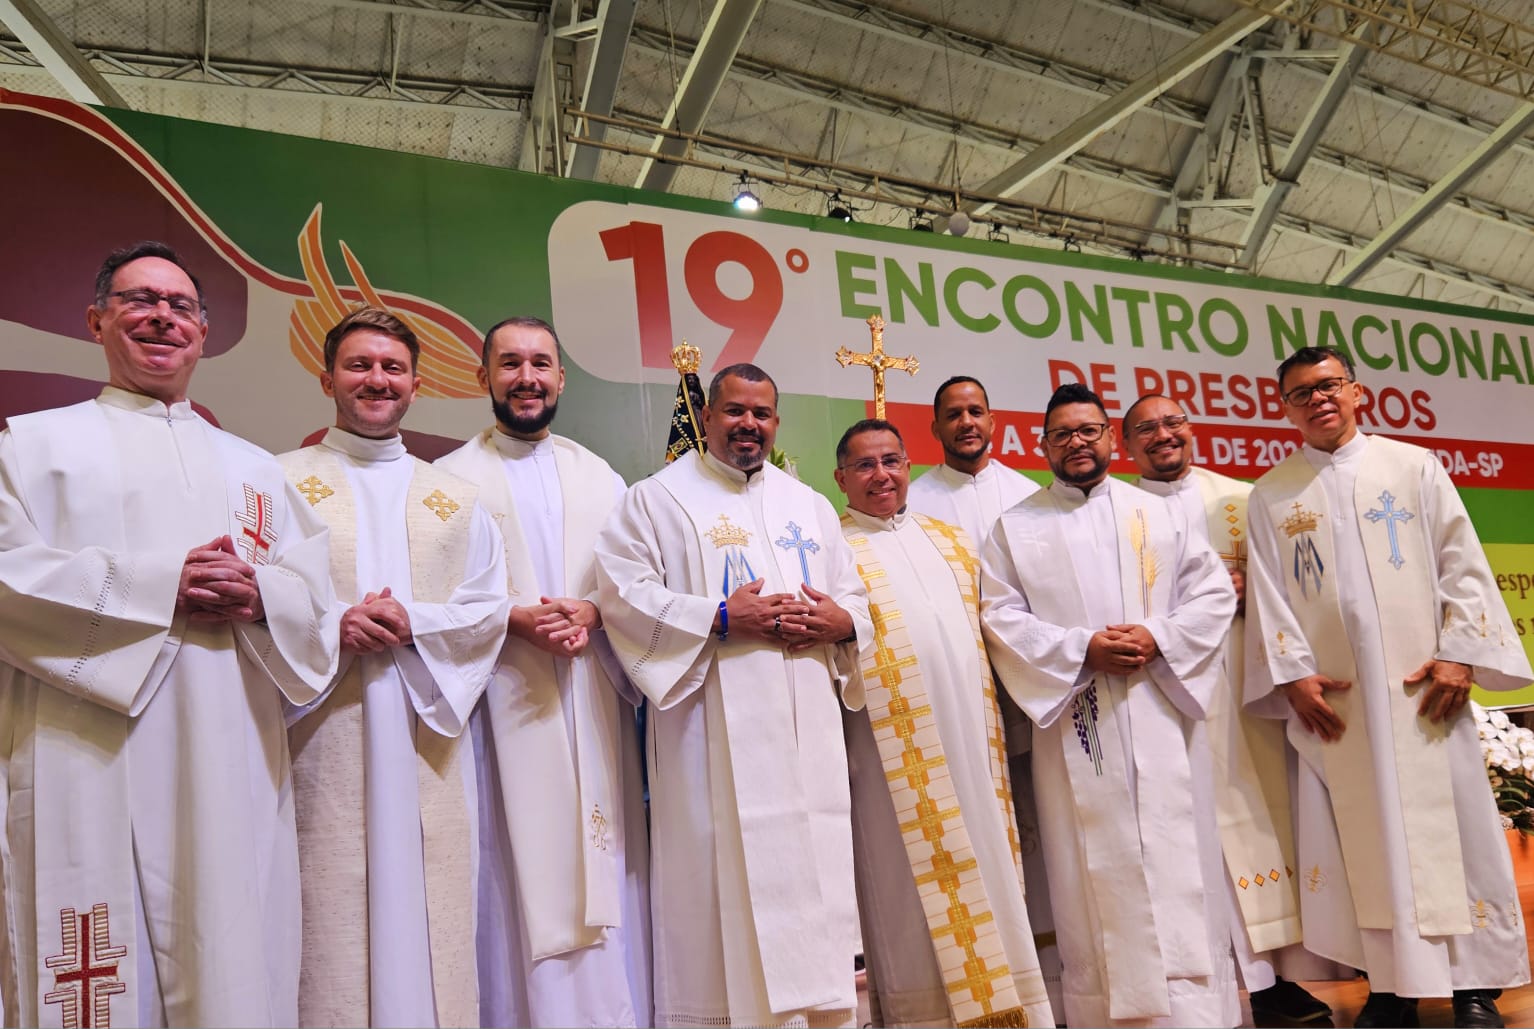 Representantes da Diocese de Cachoeiro participam do Encontro Nacional de Presbíteros 